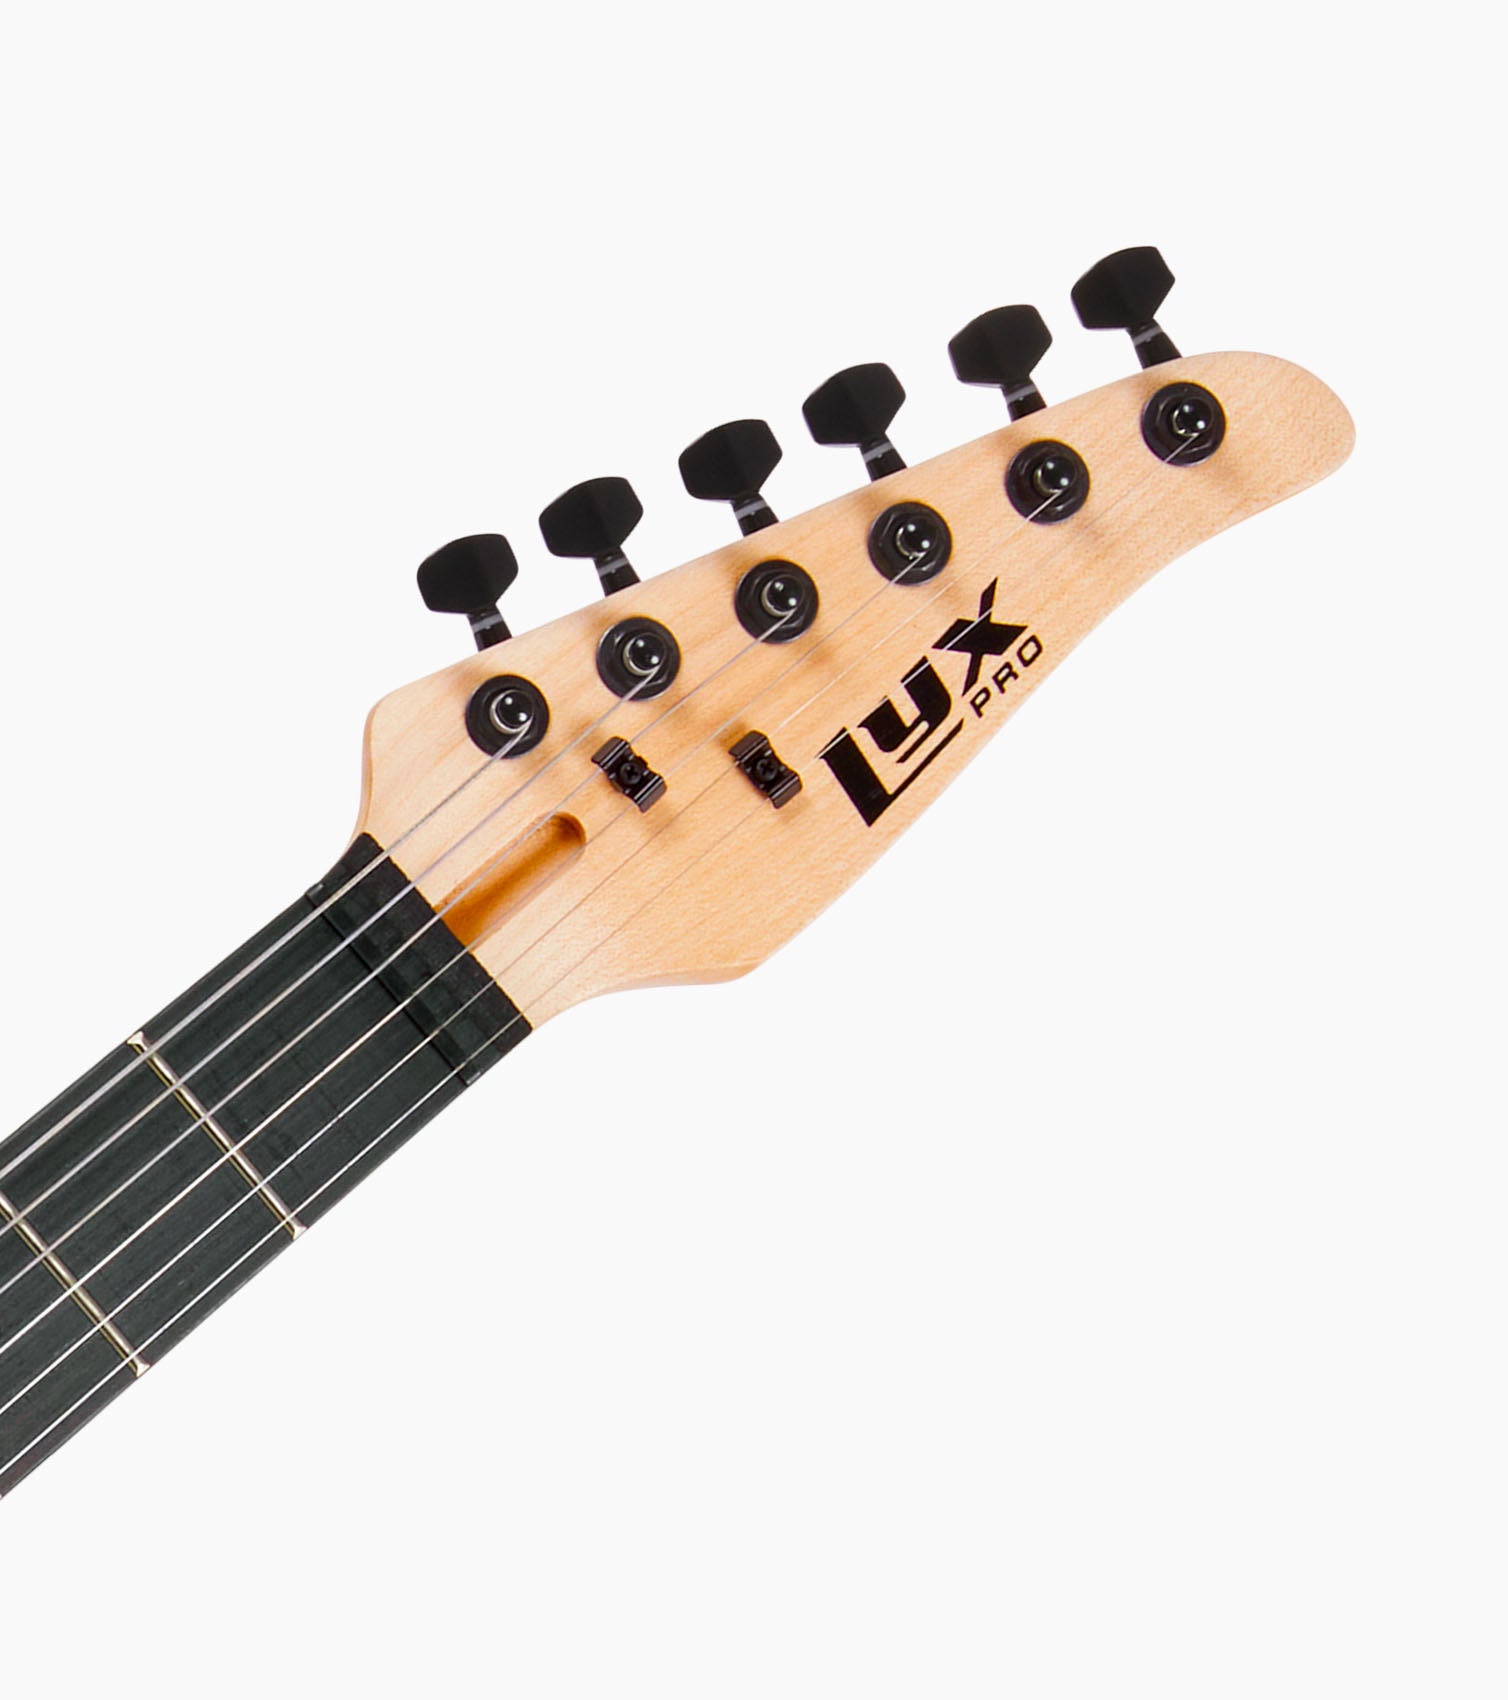 Starter Pack Accessoires Guitare Classique 3/4 Pack guitare classique X-tone